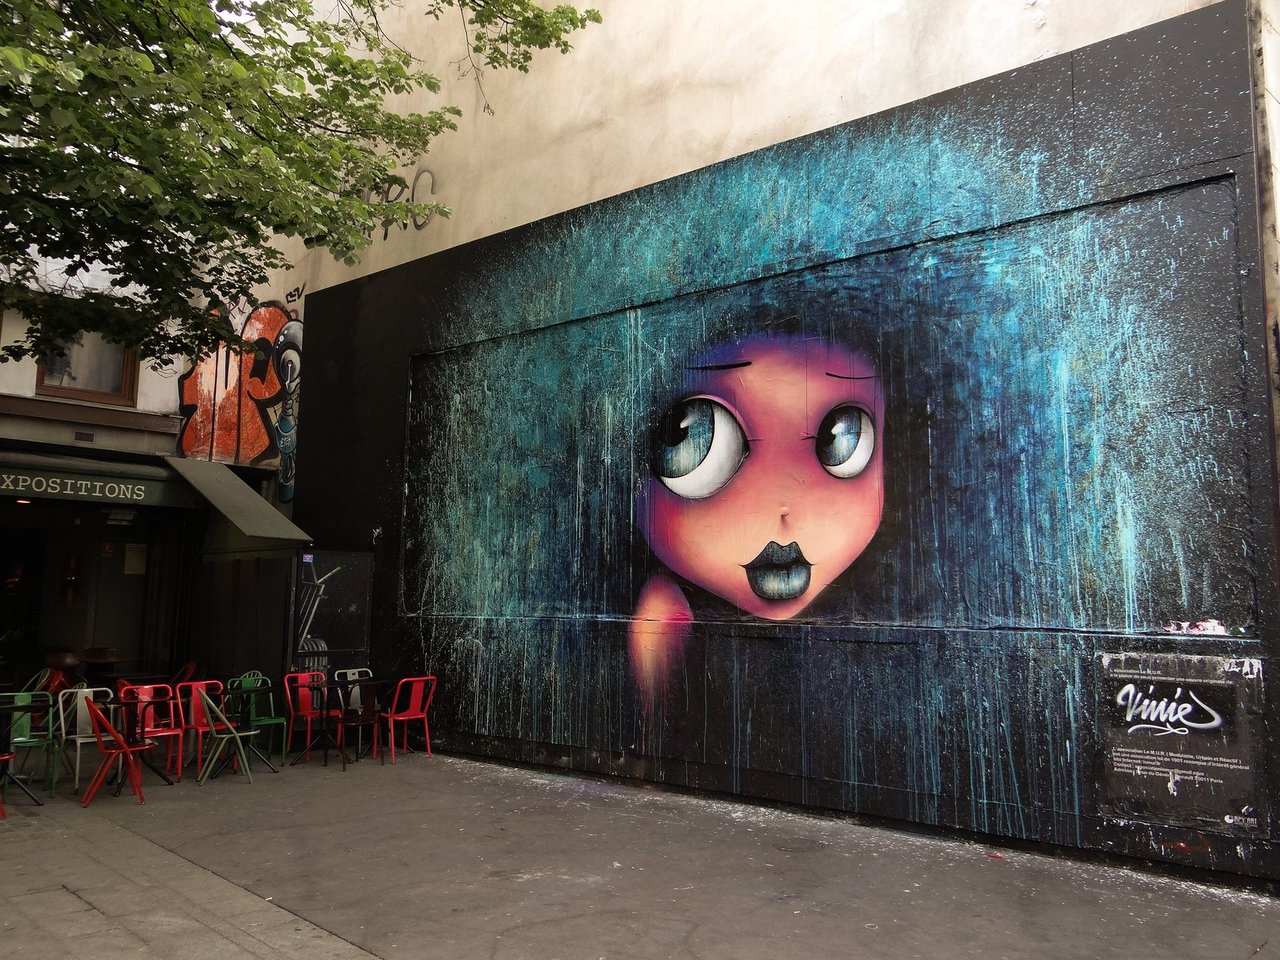 Discover my Paris Street Art Guide:https://streetart360.net/2017/03/19/street-art-in-paris-the-ultimate-guide/ Vinie Graffiti in Paris #streetart #paris https://t.co/6SoX19QHkD